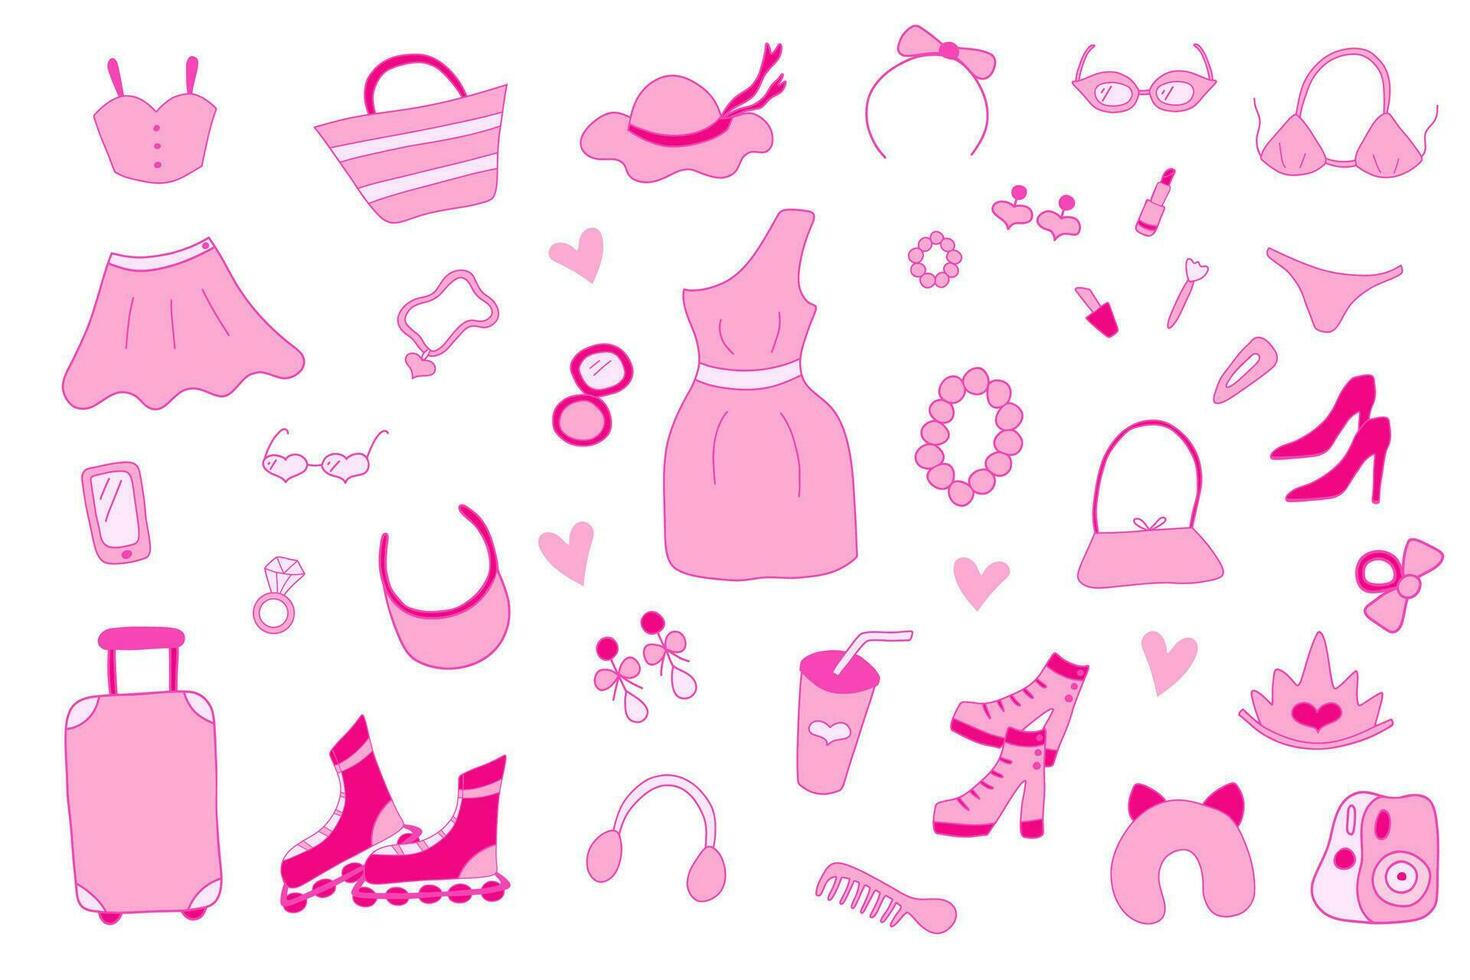 atractivo de moda rosado pegatinas colocar. nostálgico barbiecore 2000 estilo colección.aislado elementos en blanco antecedentes vestido, traje de baño, teléfono, cámara, anteojos, lápiz labial, sombrero, zapatos, bolsa, rodillos vector